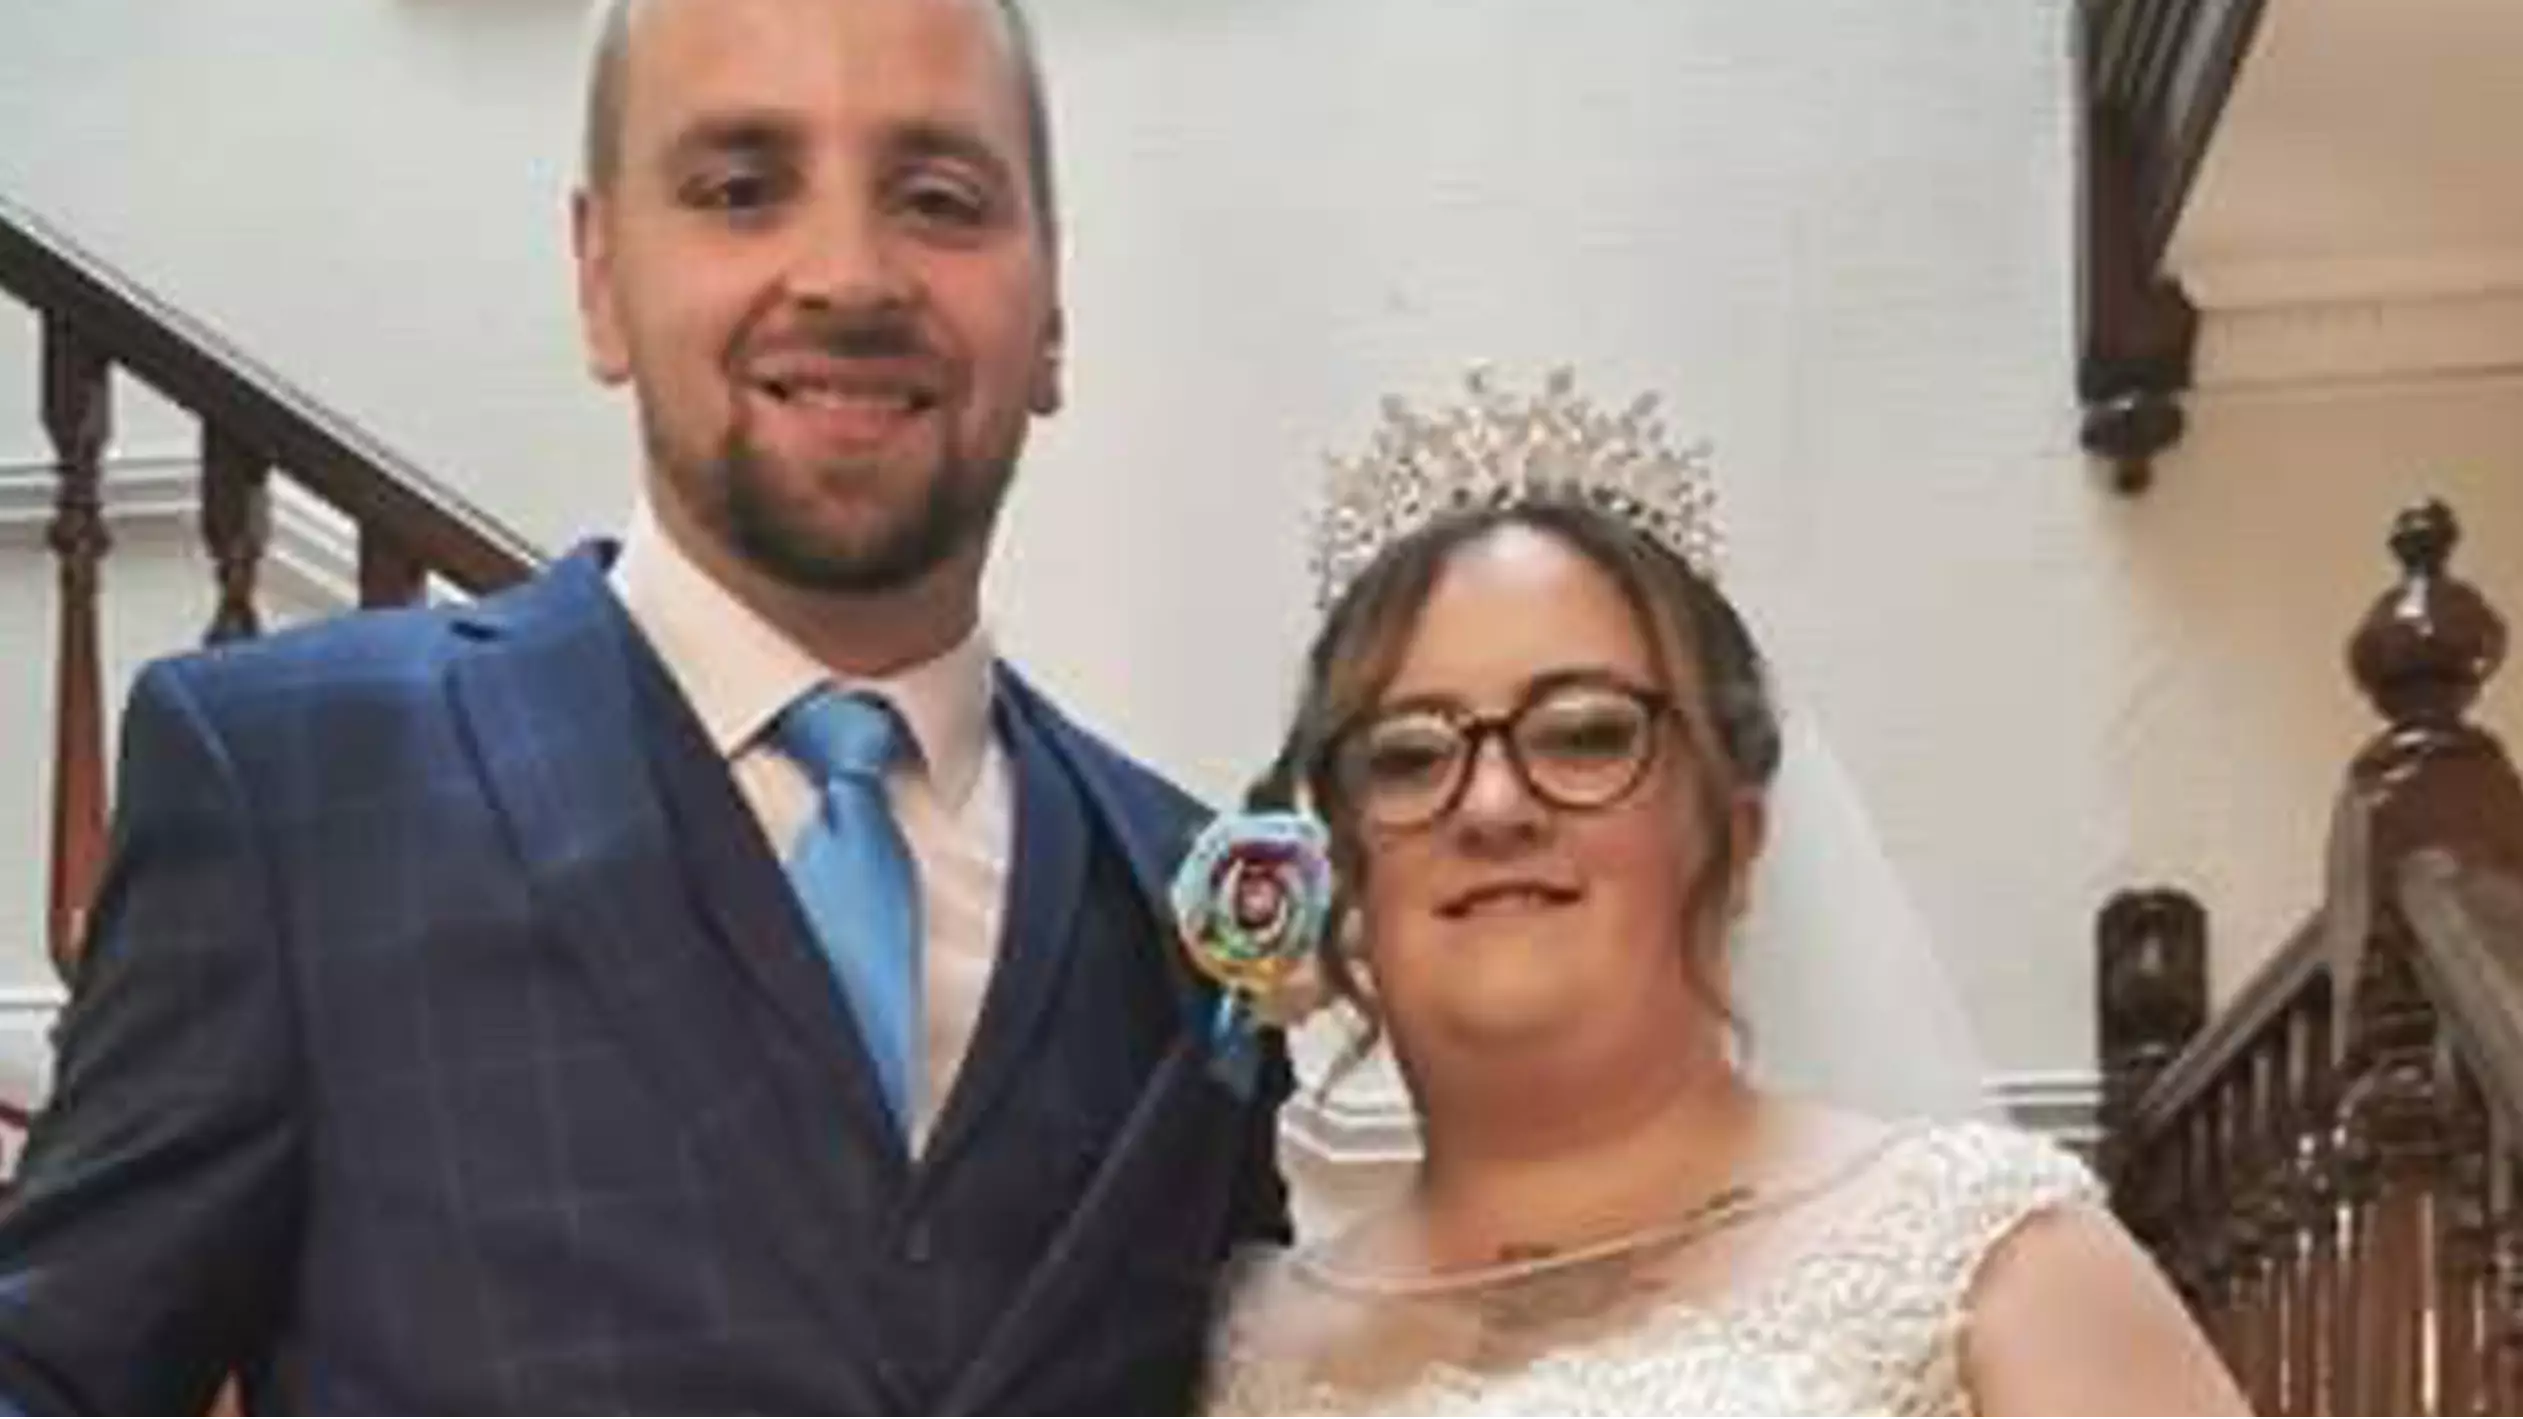 ​Couple Host Extravagant Disney Themed Wedding With Massive Cake